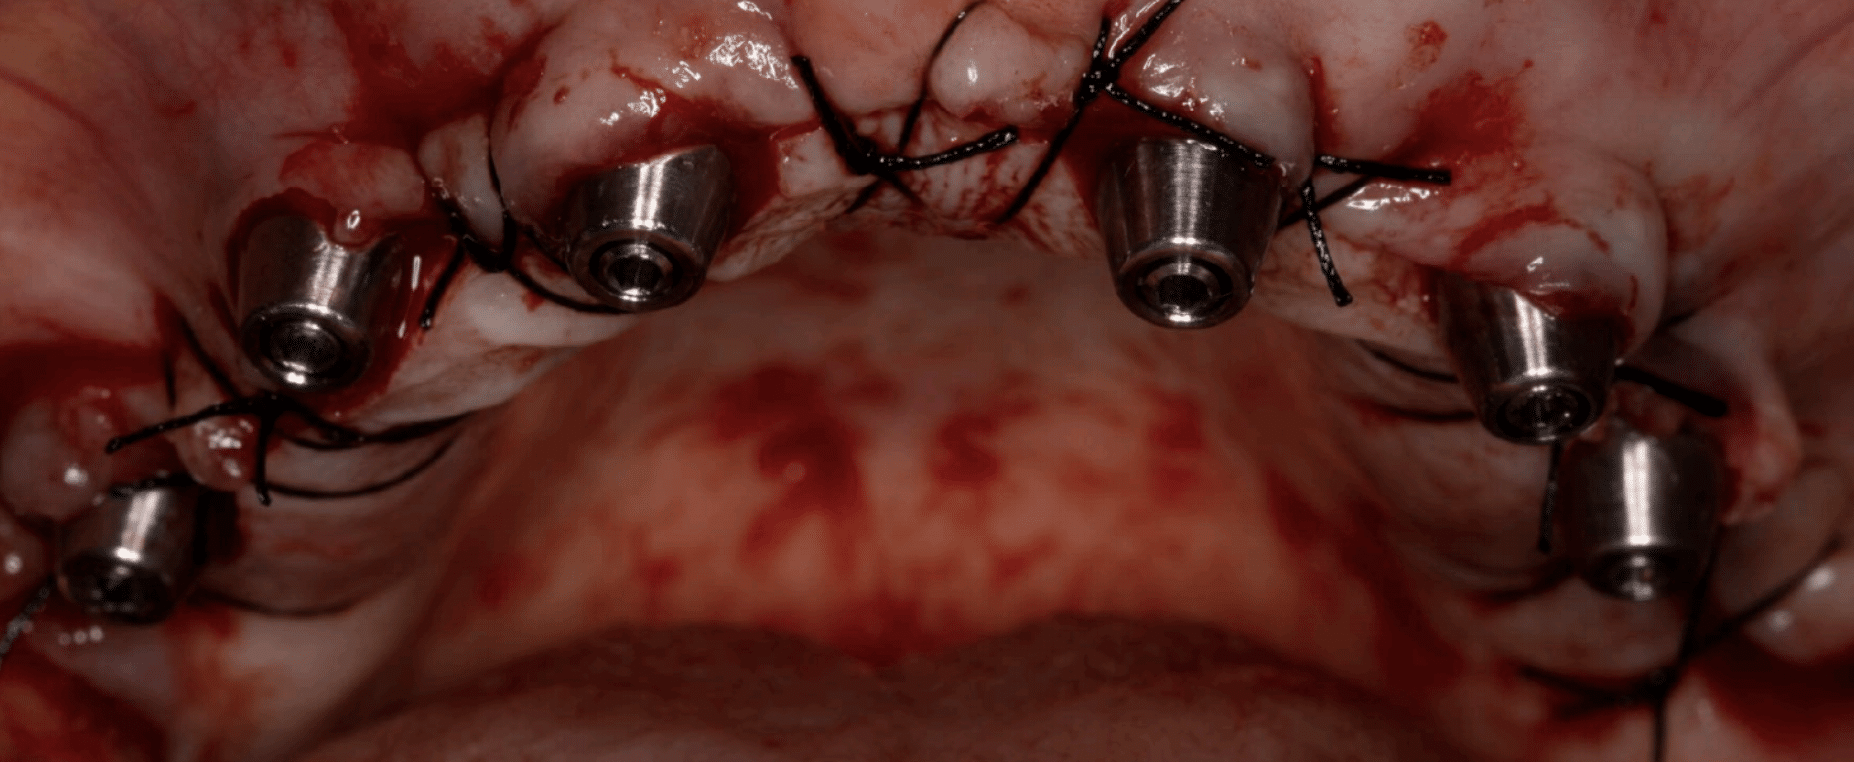 sutura maxilar superior